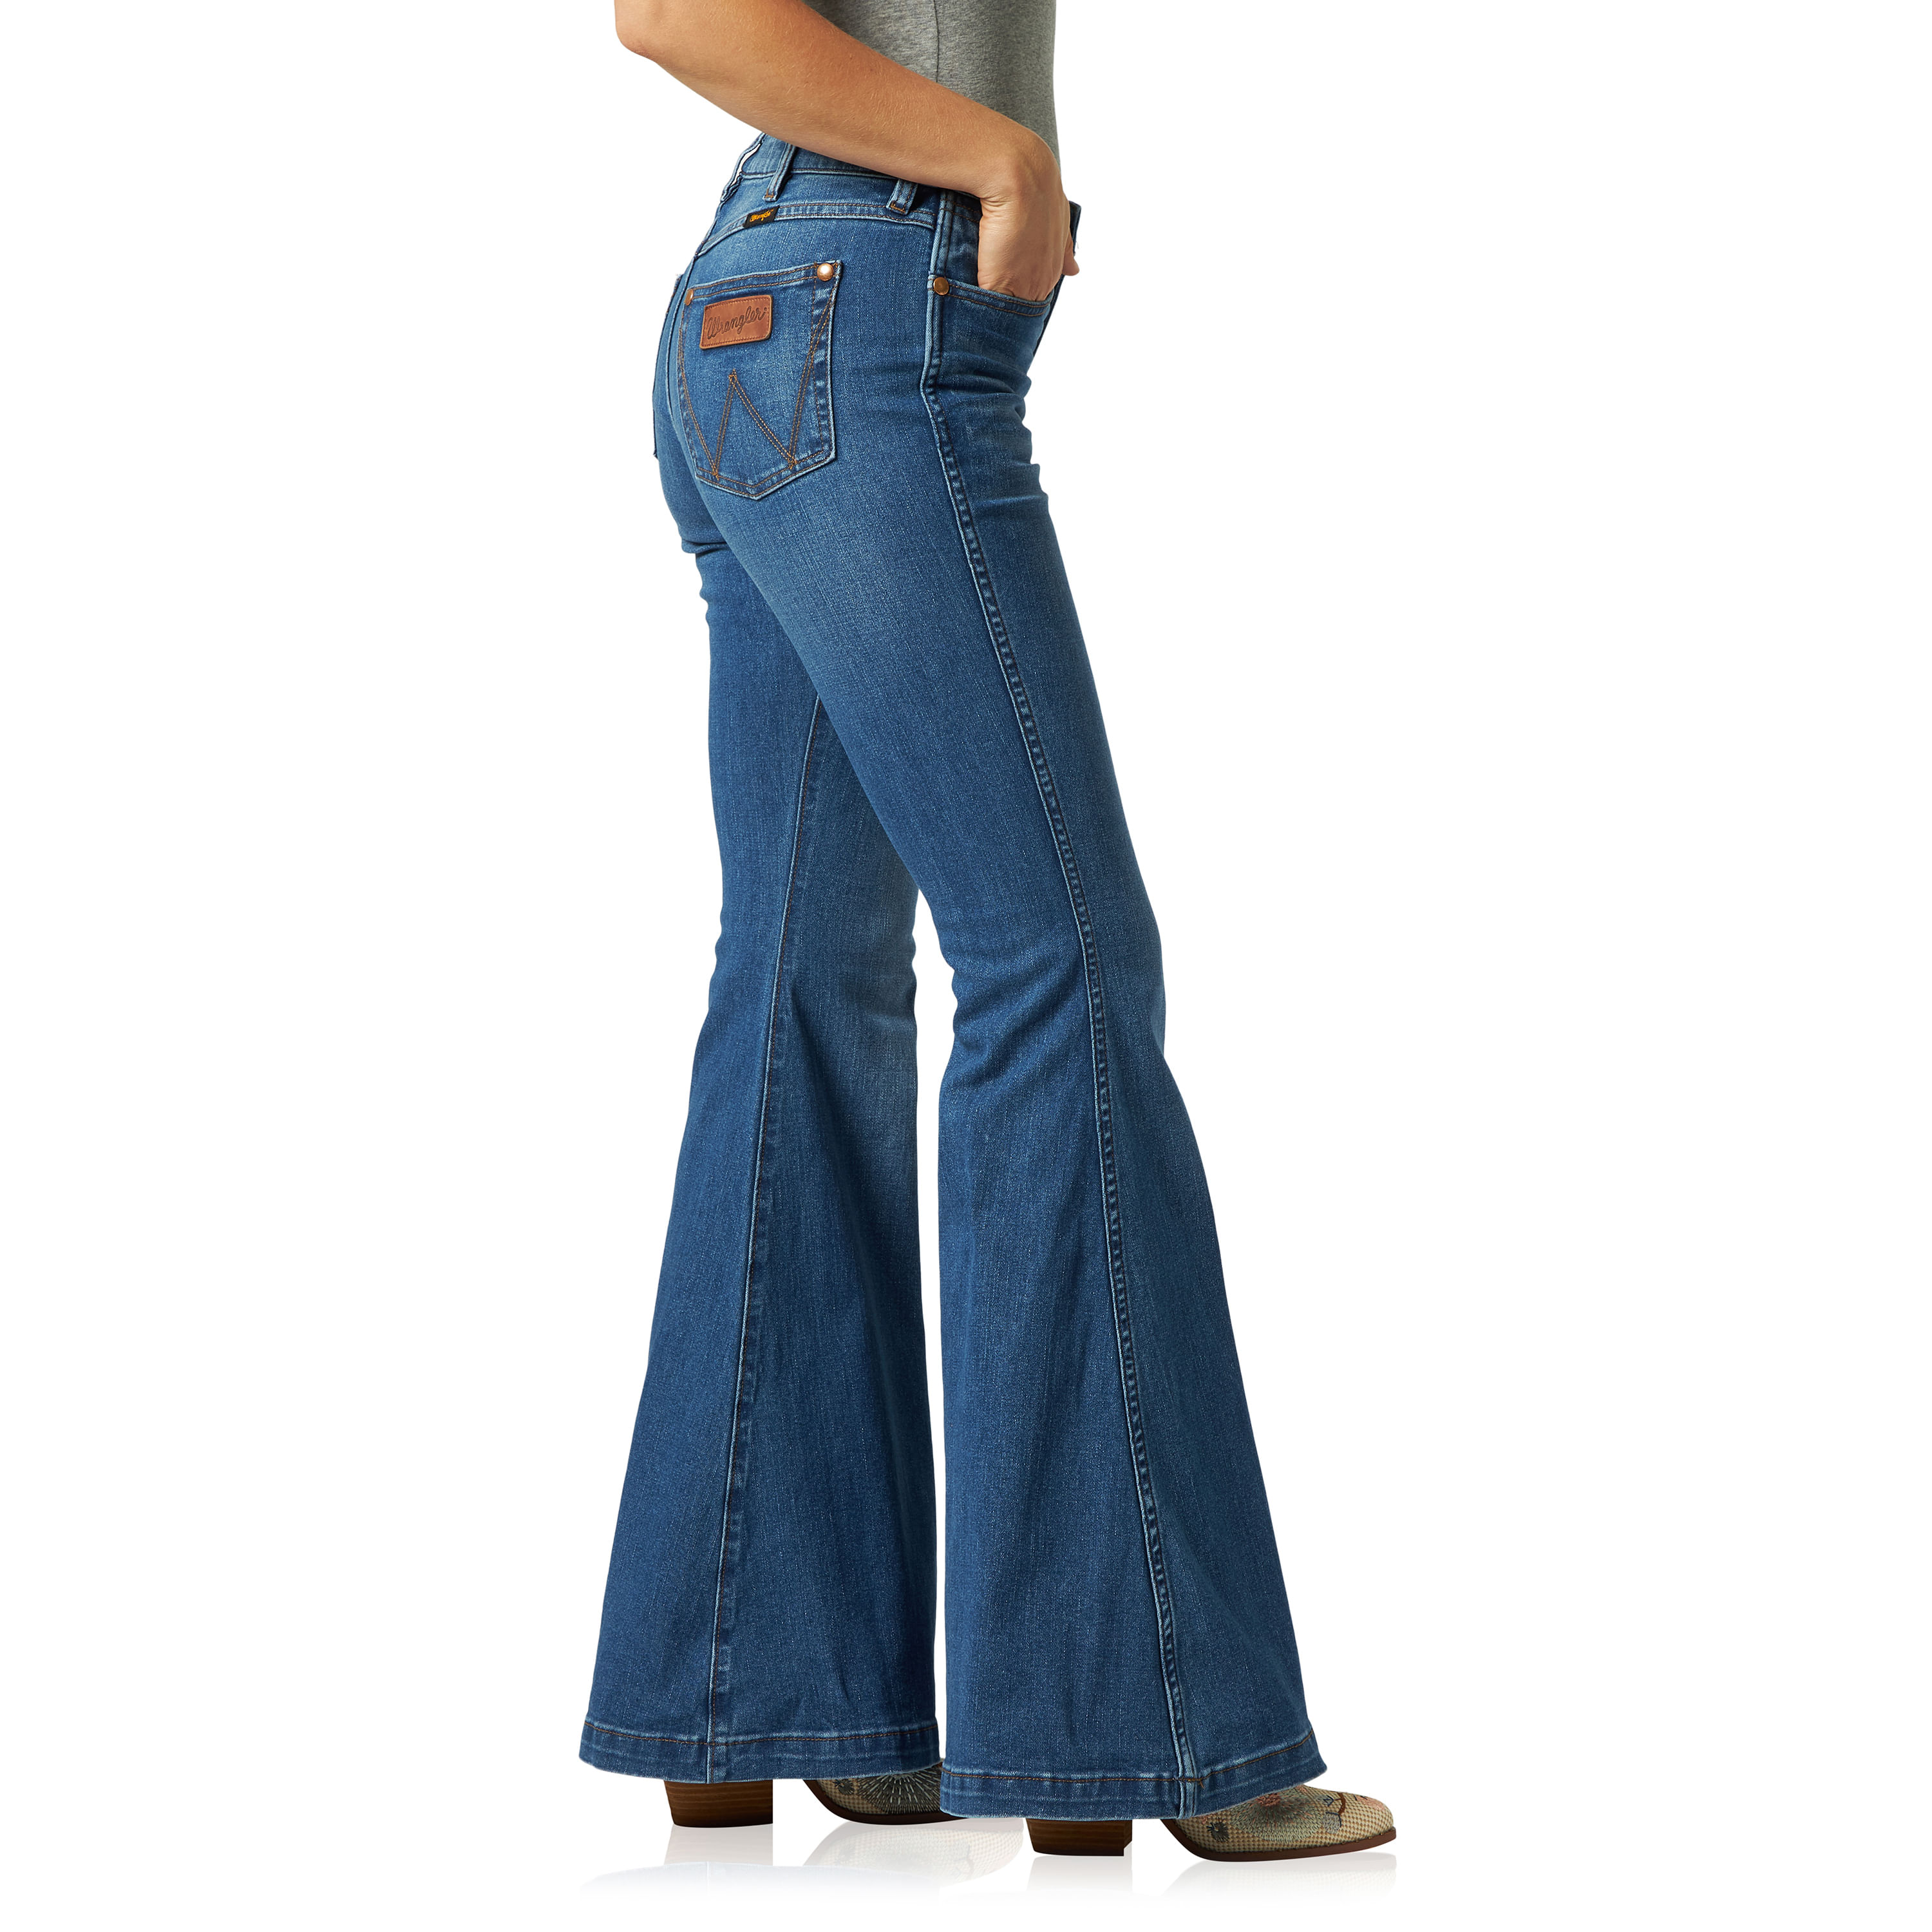 Ladies-Wrangler-Gabriela-Retro-Jeans-237295.jpg?v=637110974571570000